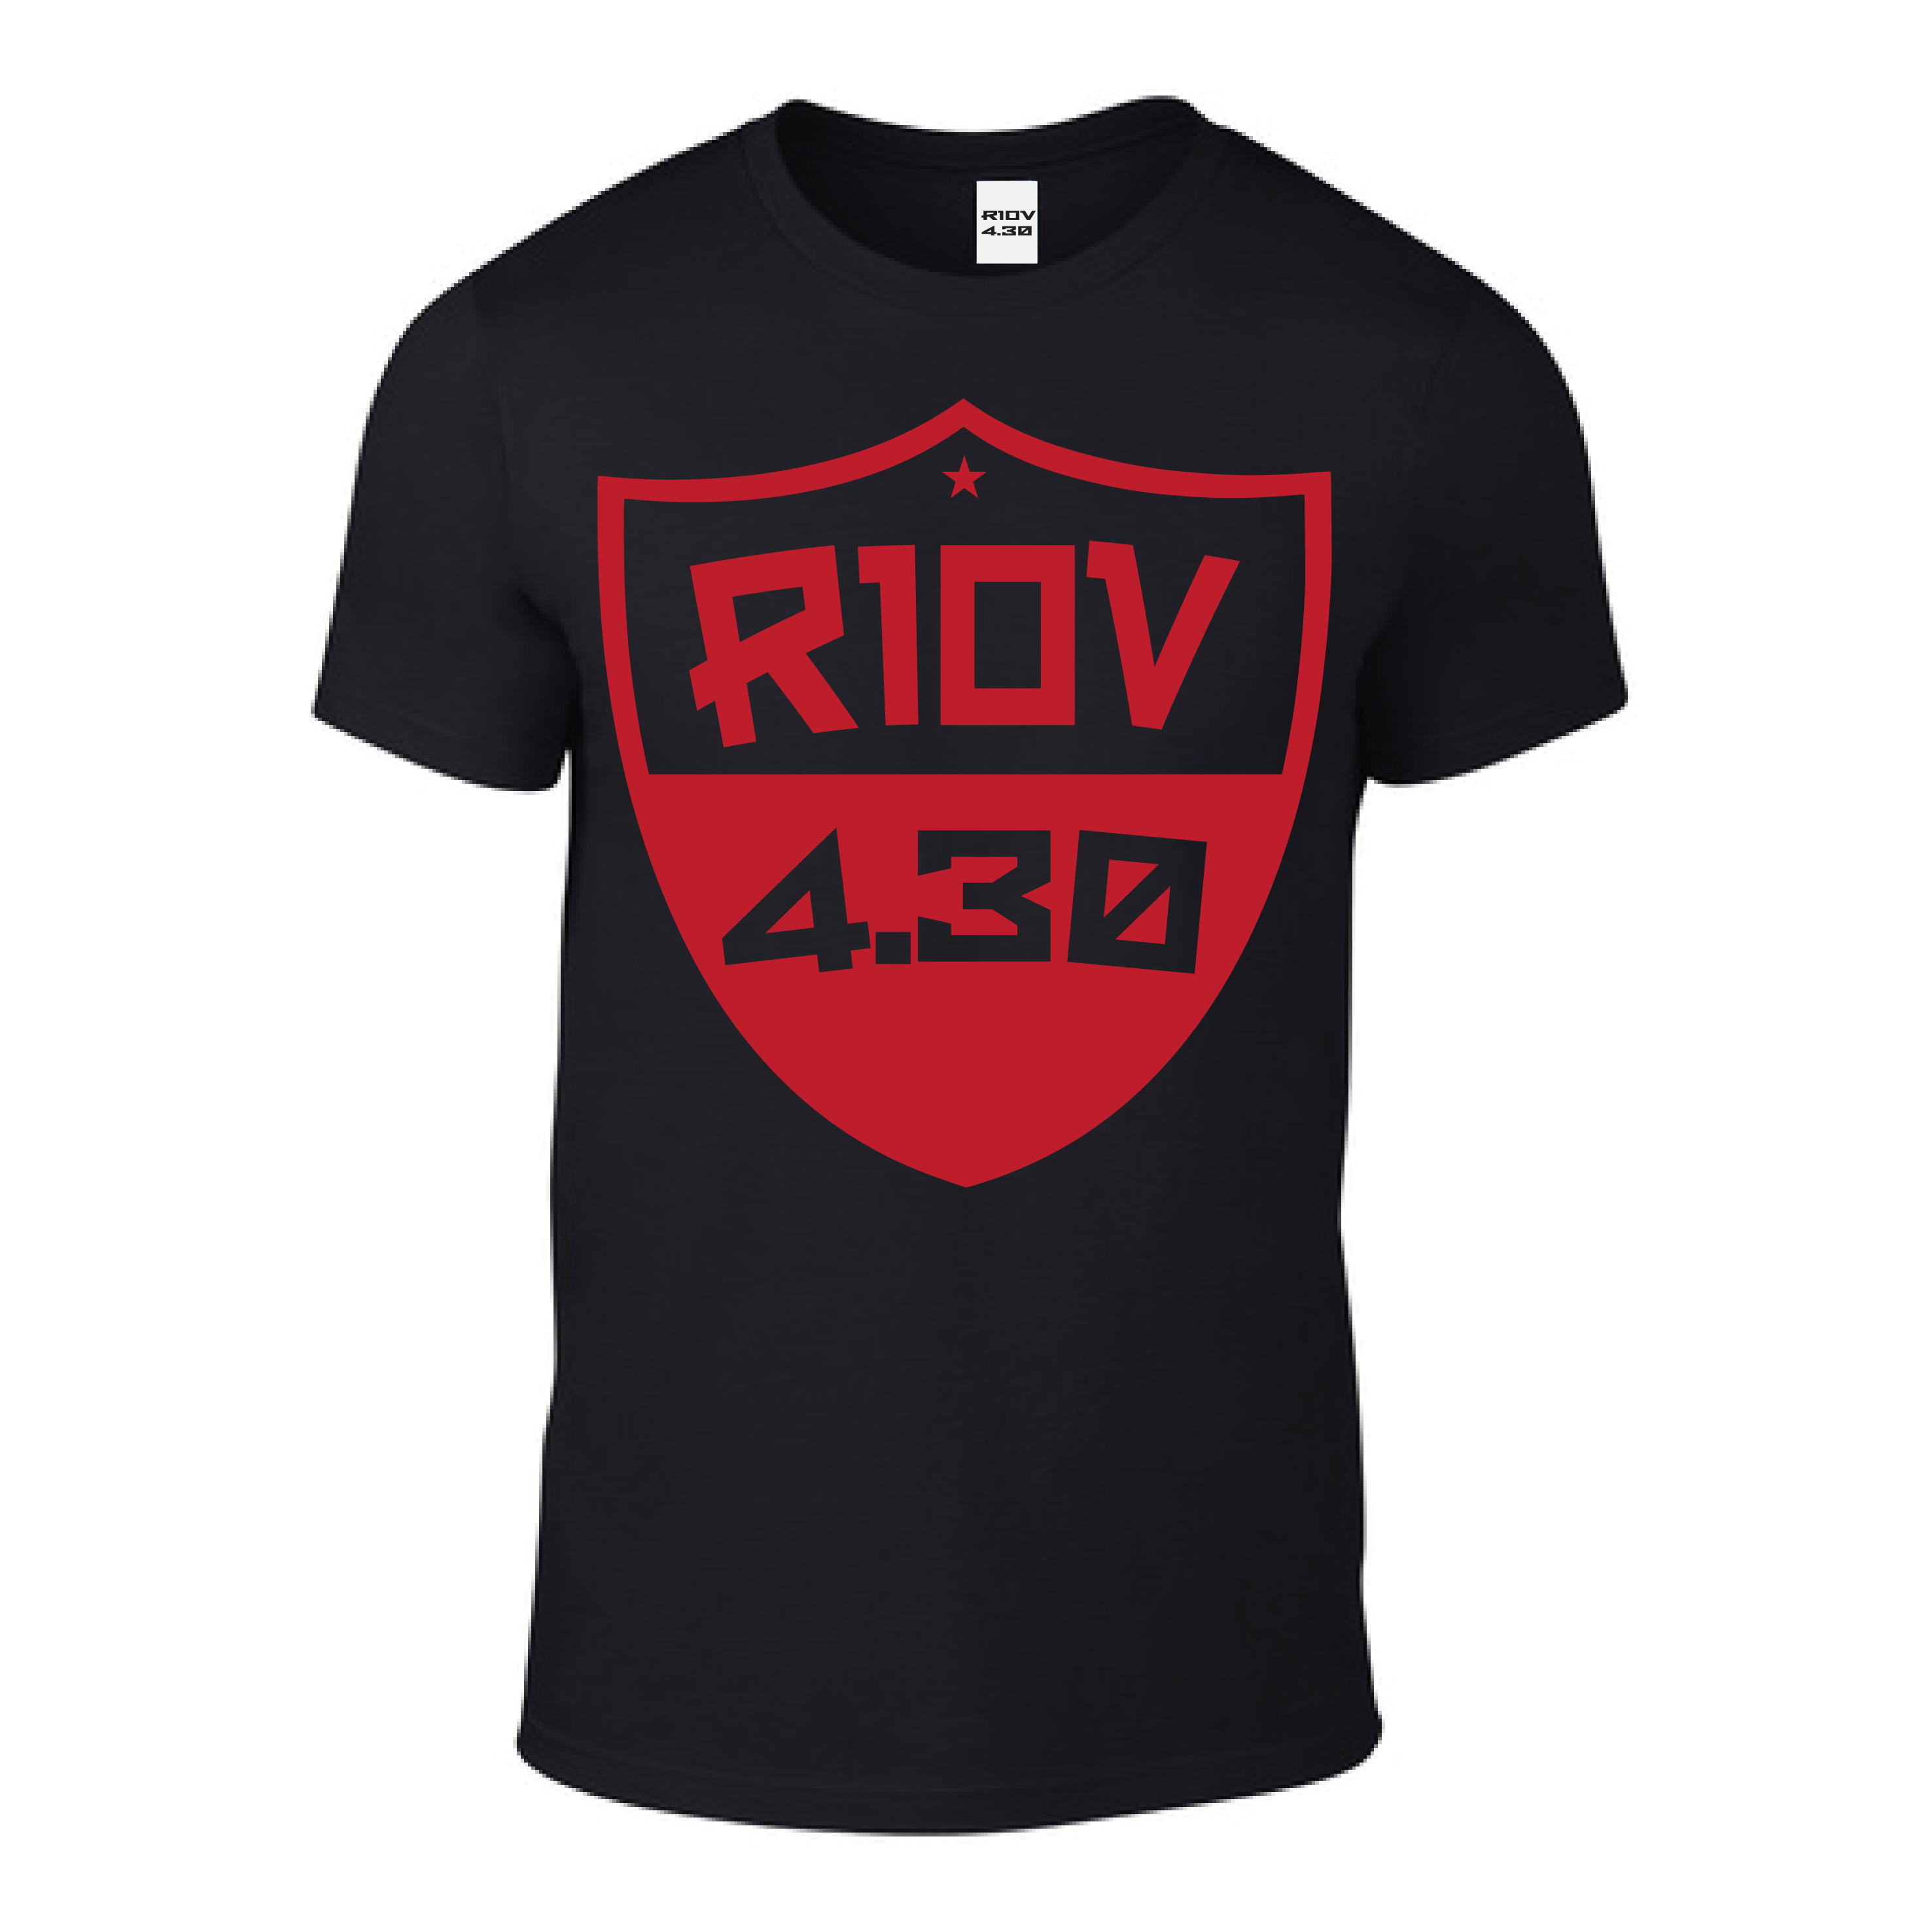 Riov 4.30 Soft Red